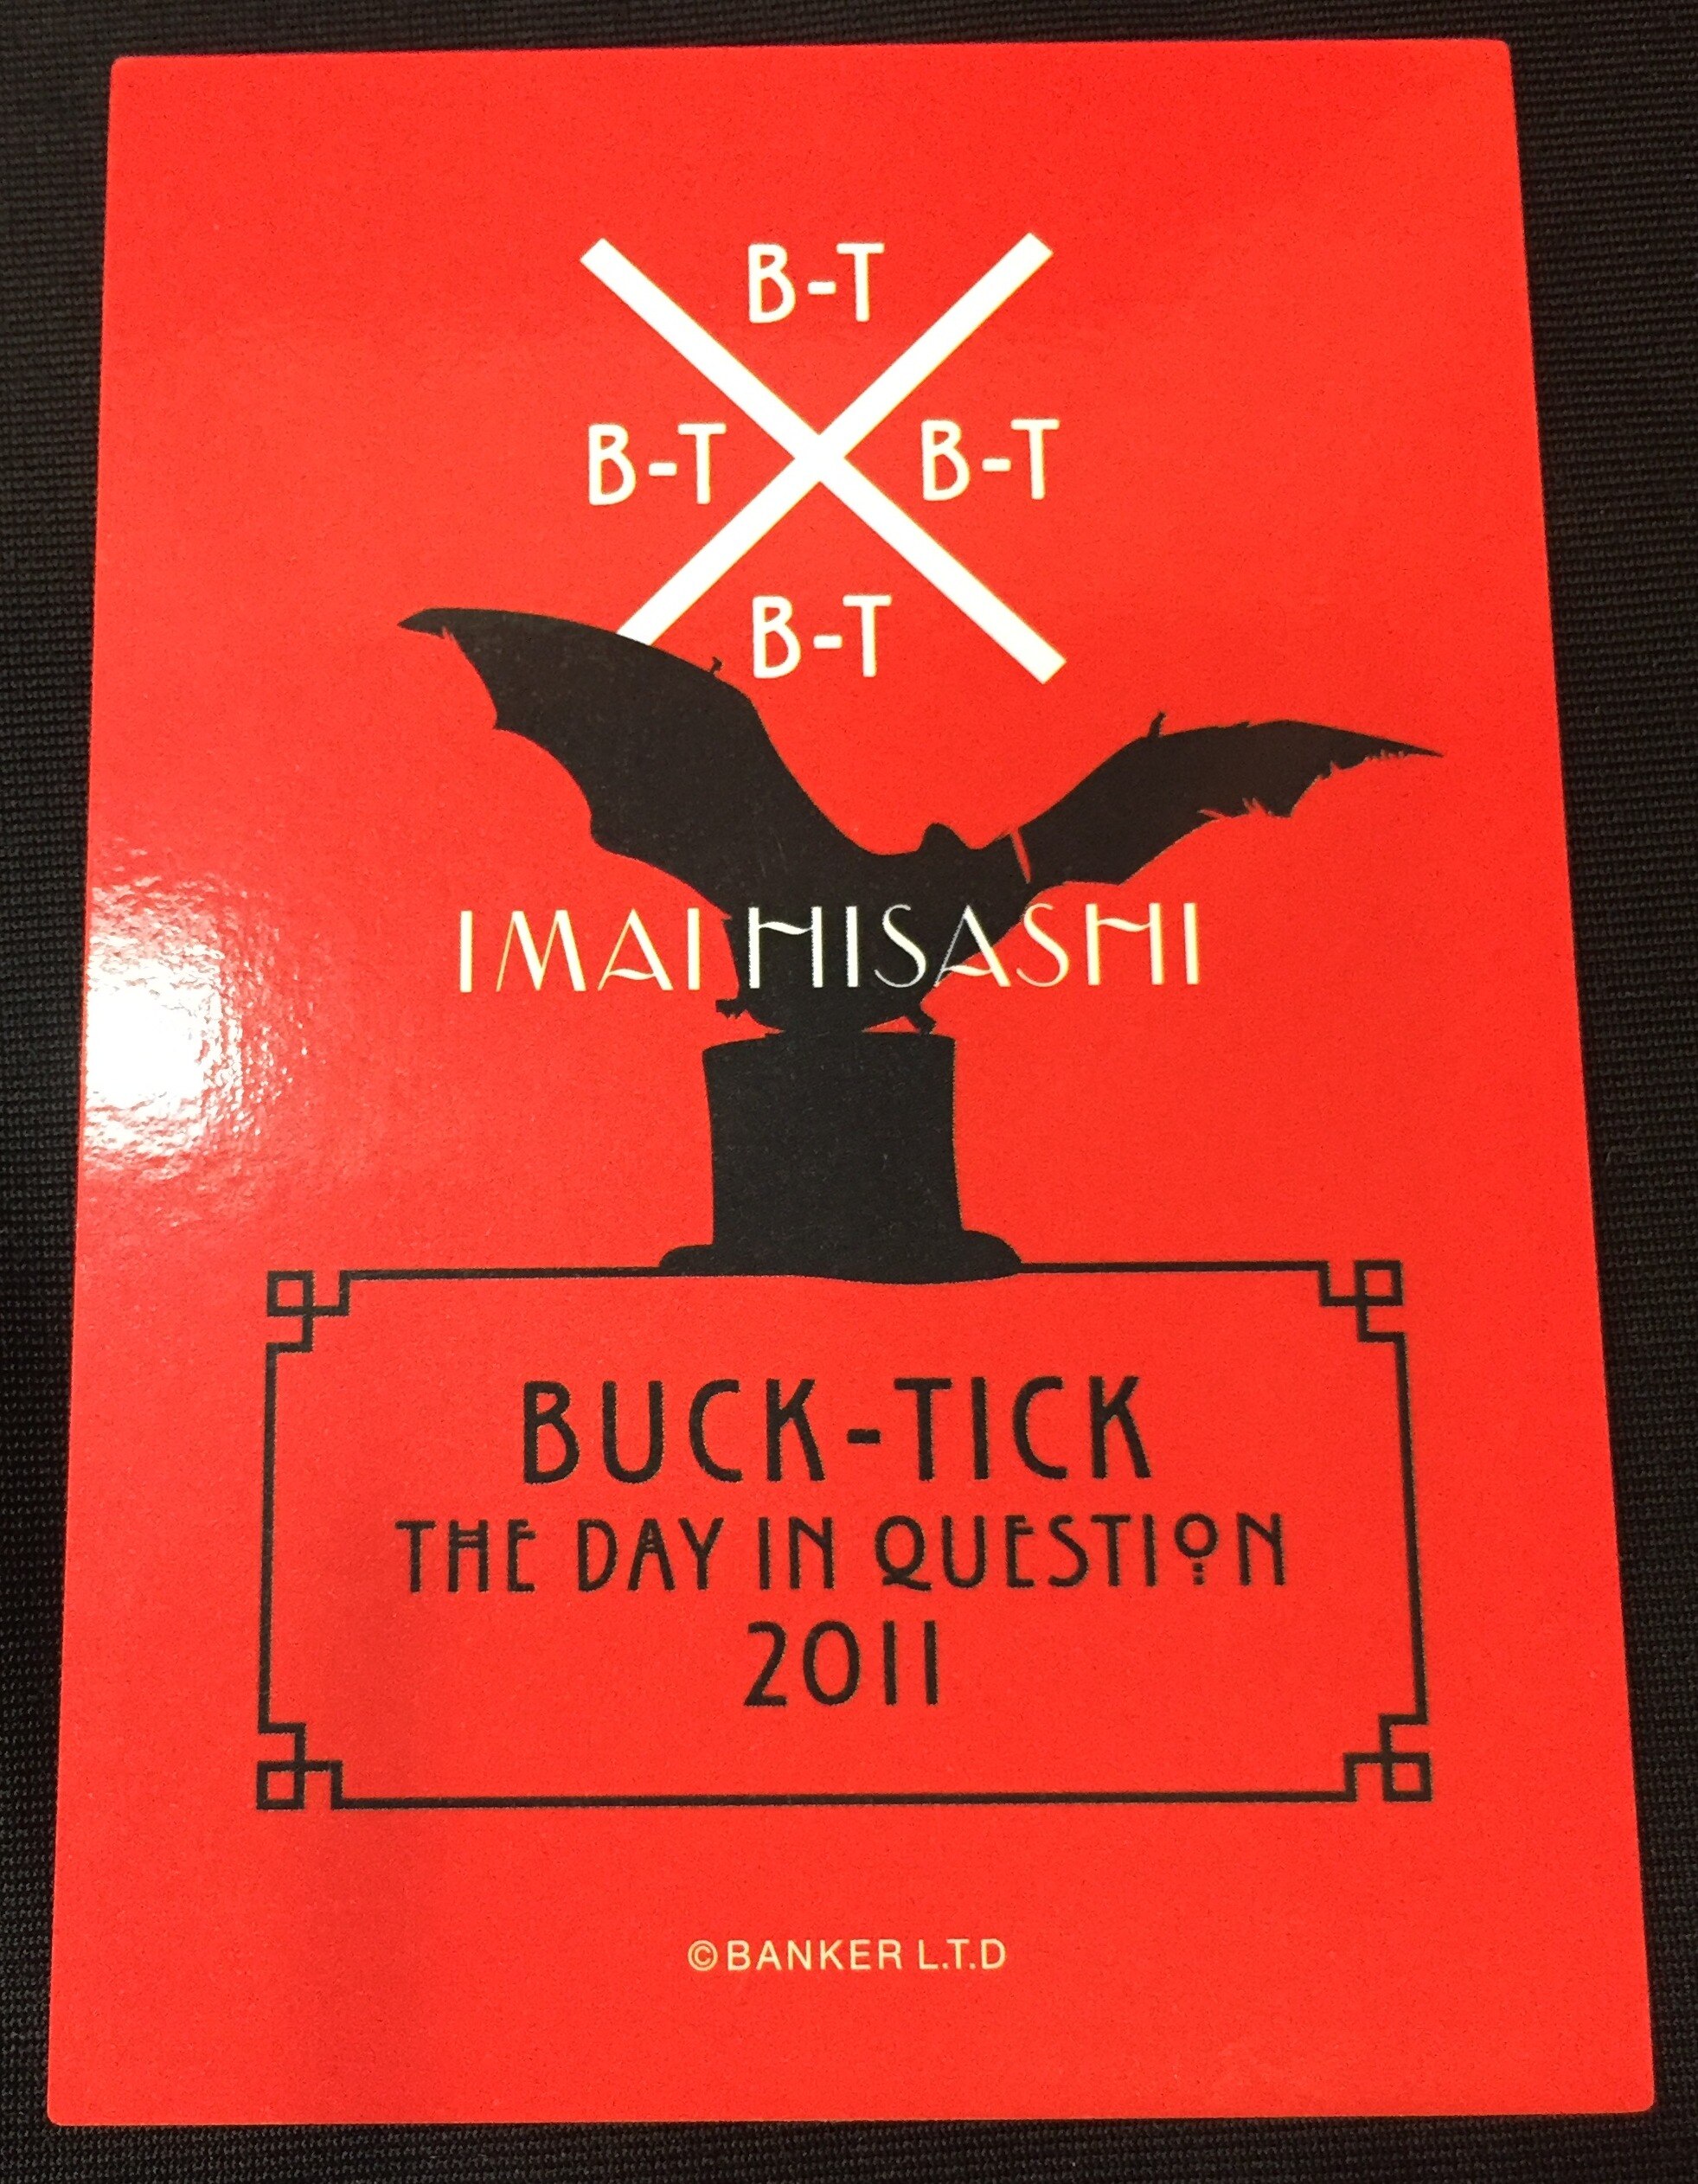 BUCK-TICK Random Trading Card Hisashi Imai / THE DAY IN QUESTION